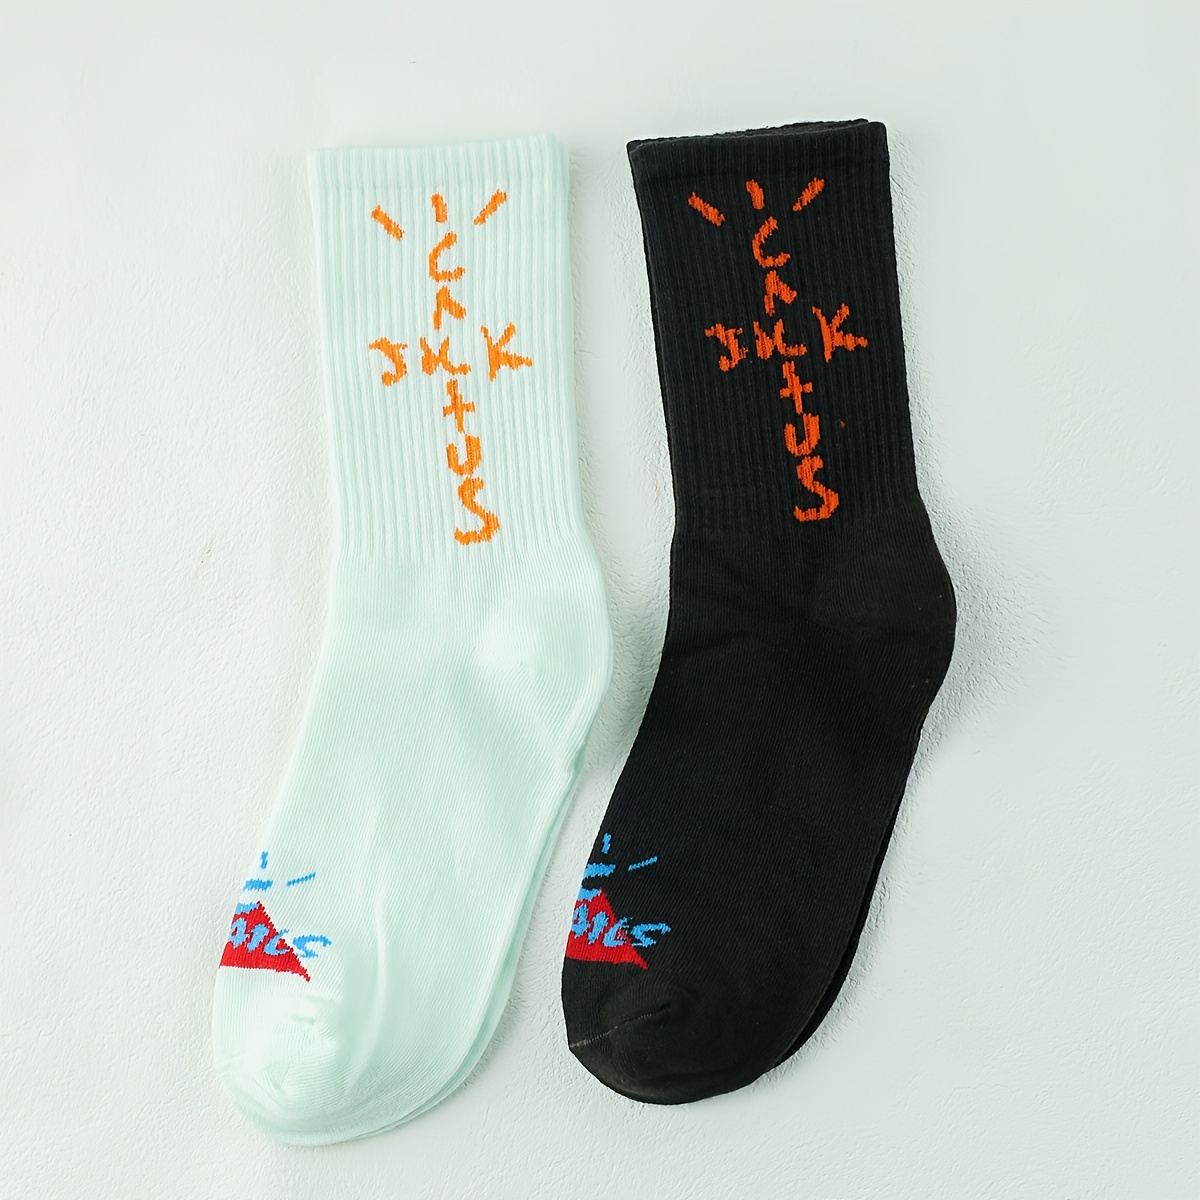 

2 Pairs Of Men's Trendy Cartoon Pattern Crew Socks, Breathable Comfy Casual Street Style Unisex Socks For Men's Outdoor Wearing All Seasons Wearing